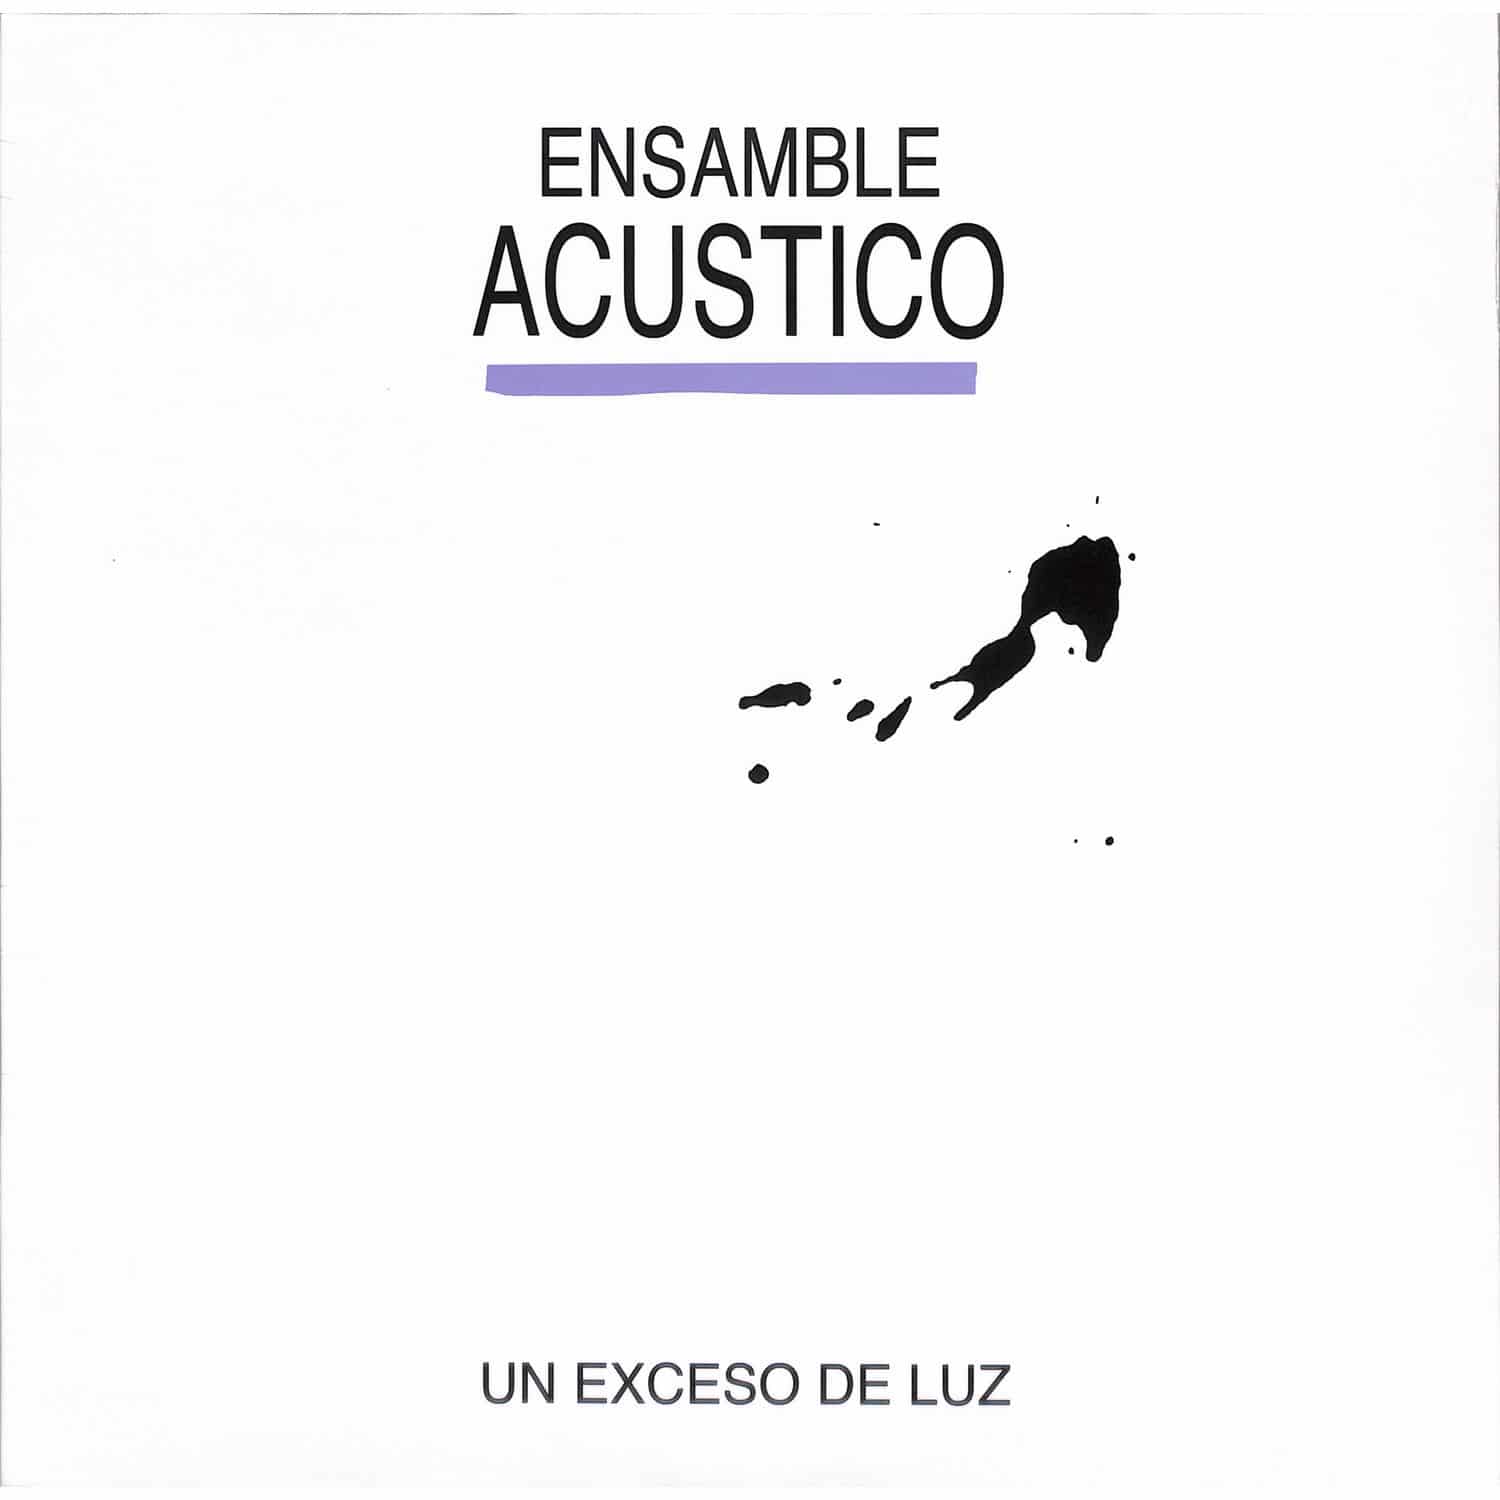 Ensamble Acustico - UN EXCESO DE LUZ 